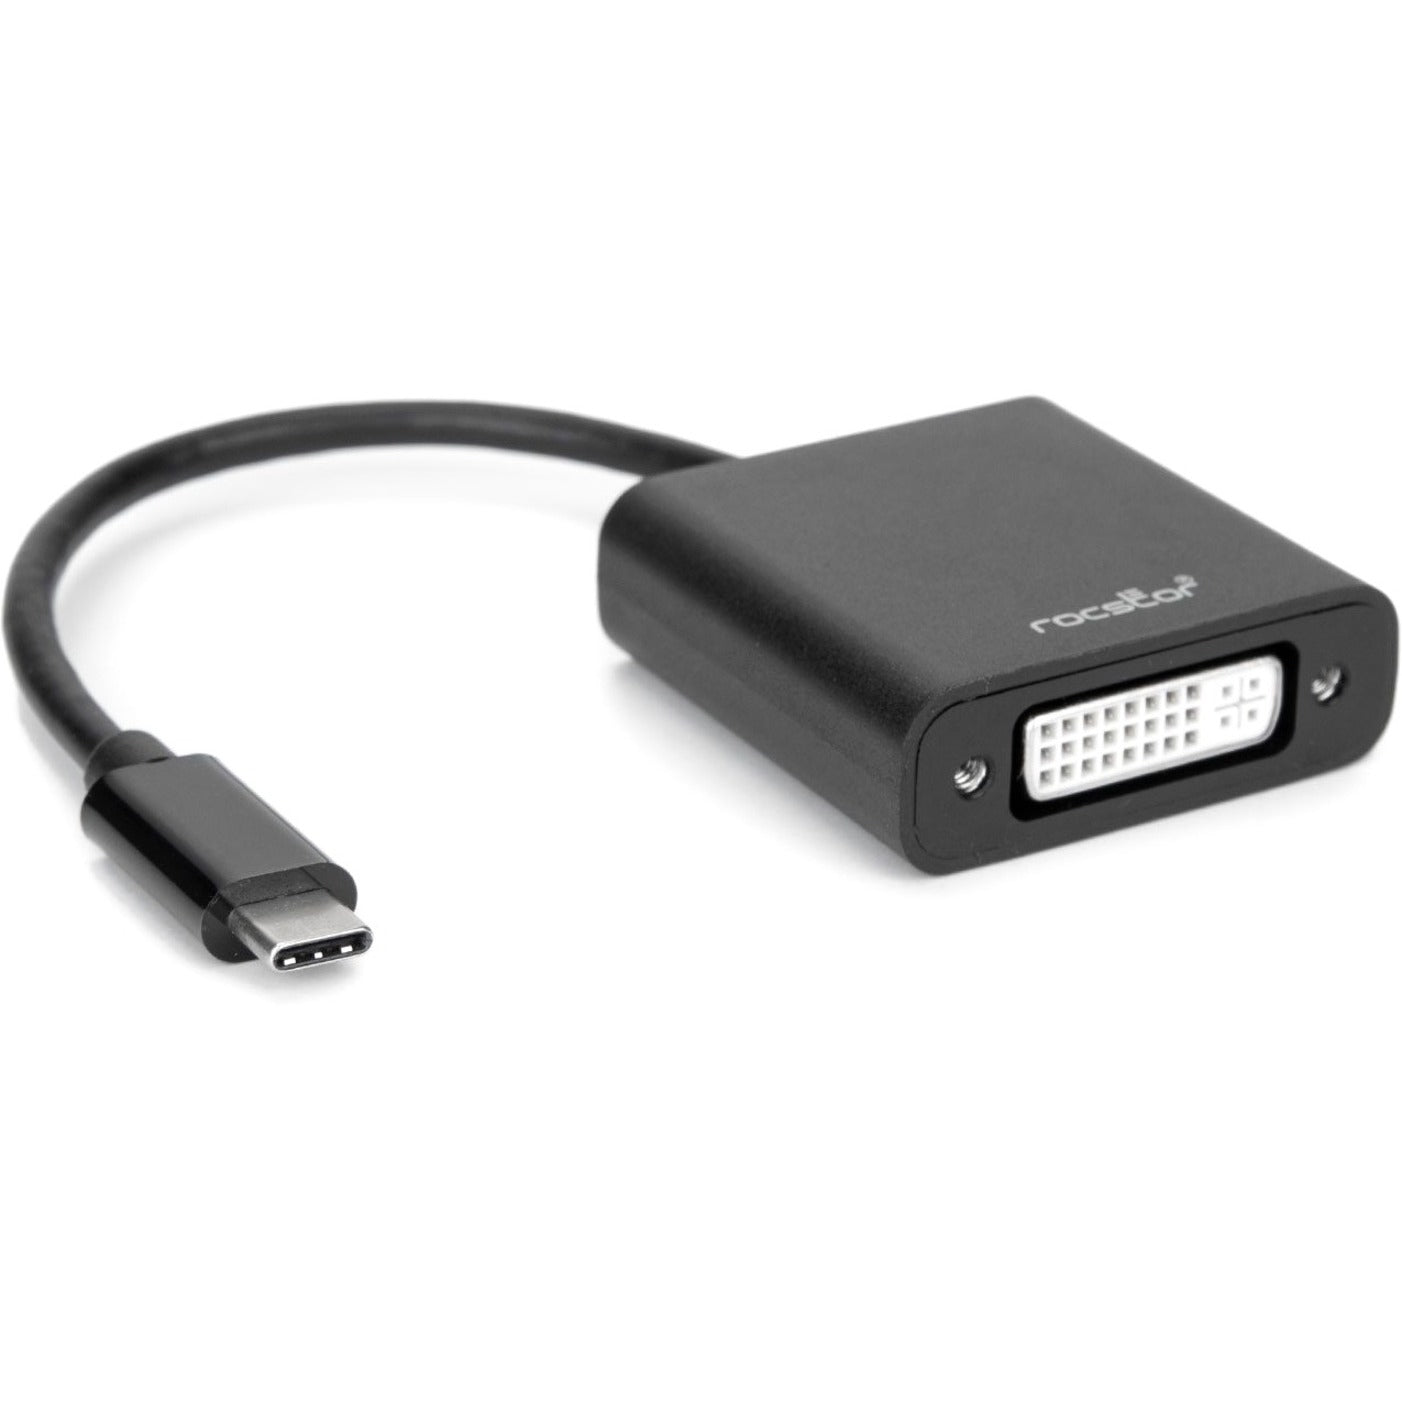 Rocstor Y10C135-B1 Premium USB-C to DVI Adapter Converter, Mac Compatible